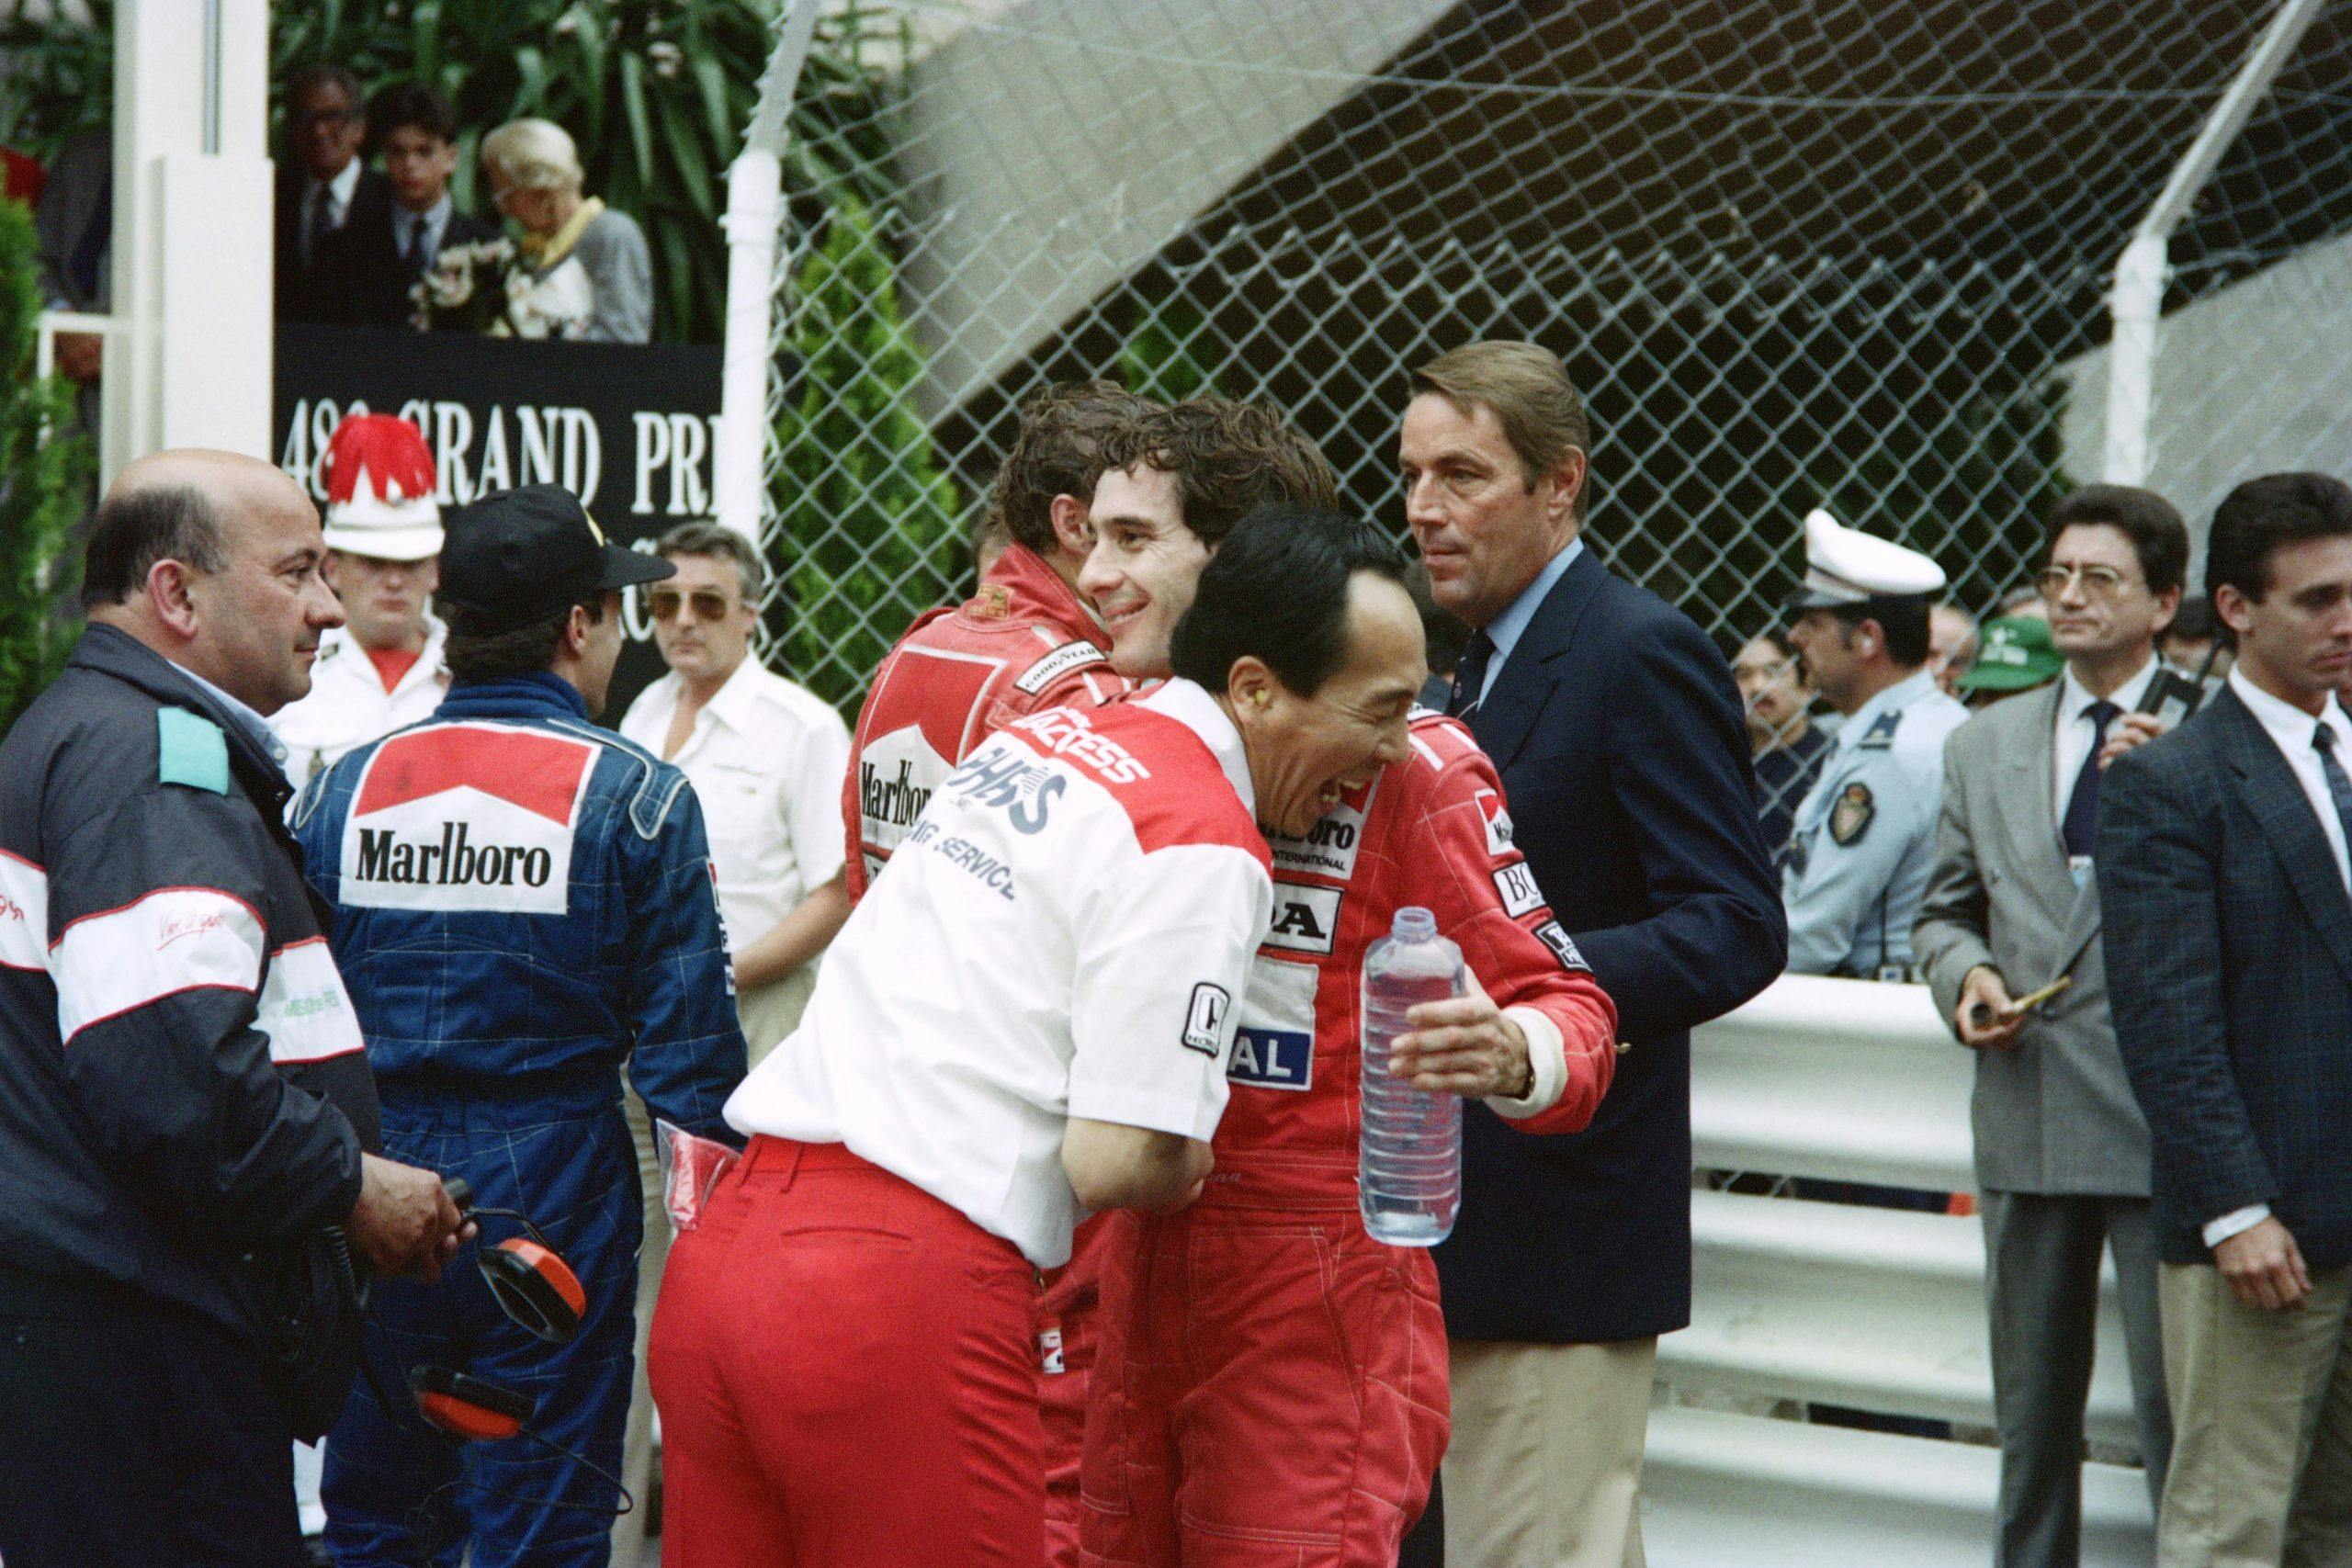 McLaren team member embraces Brazilian driver Ayrton Senna